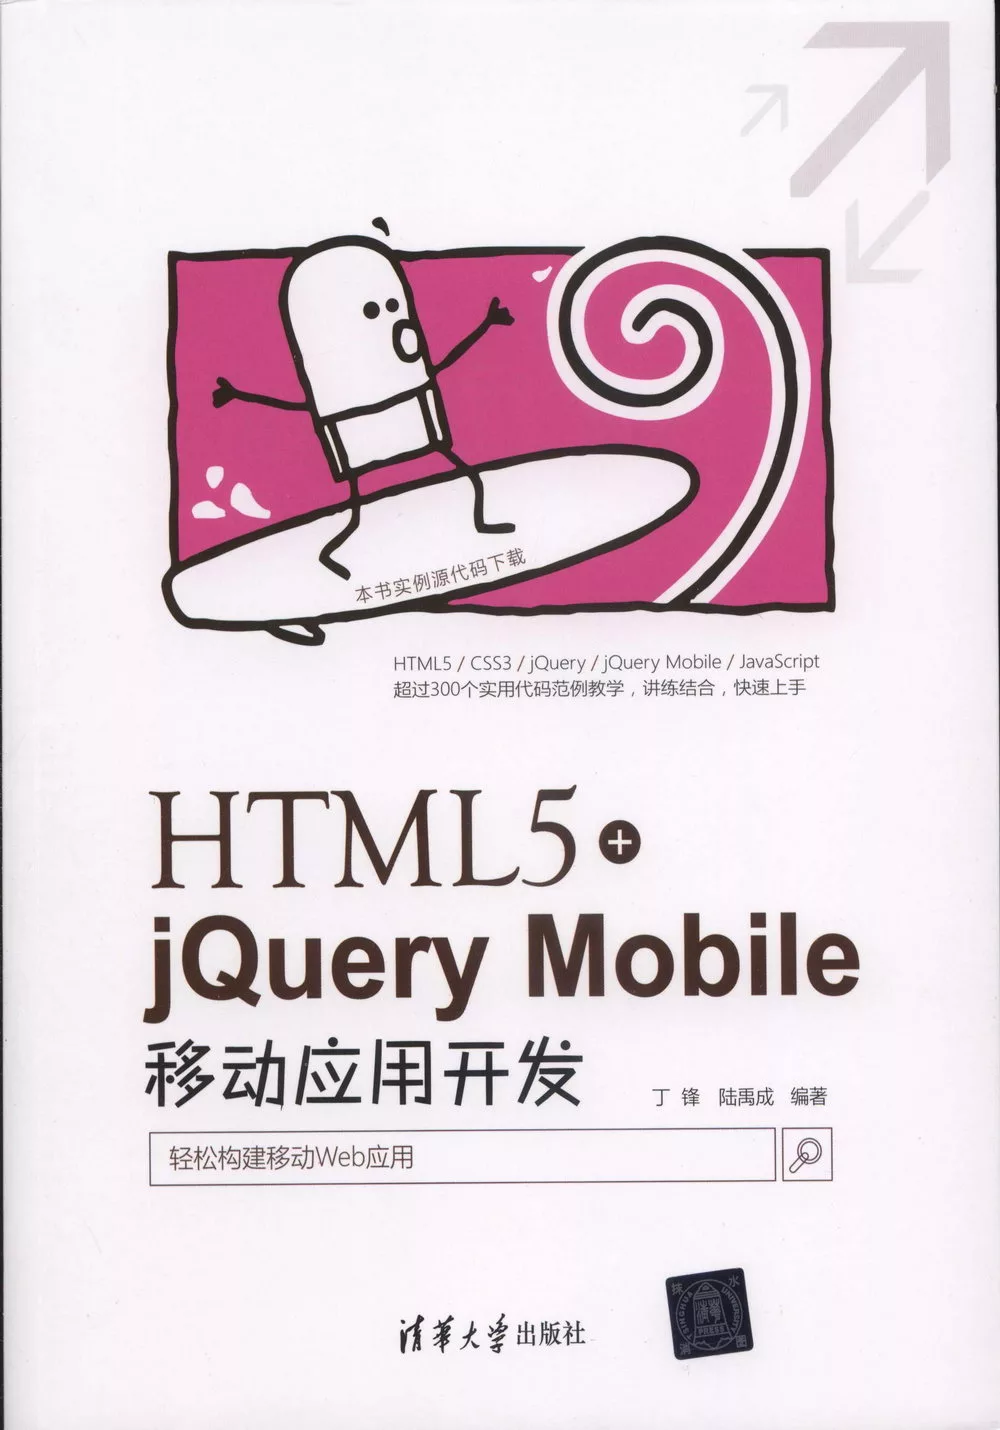 HTML5+jQuery Mobile移動應用開發